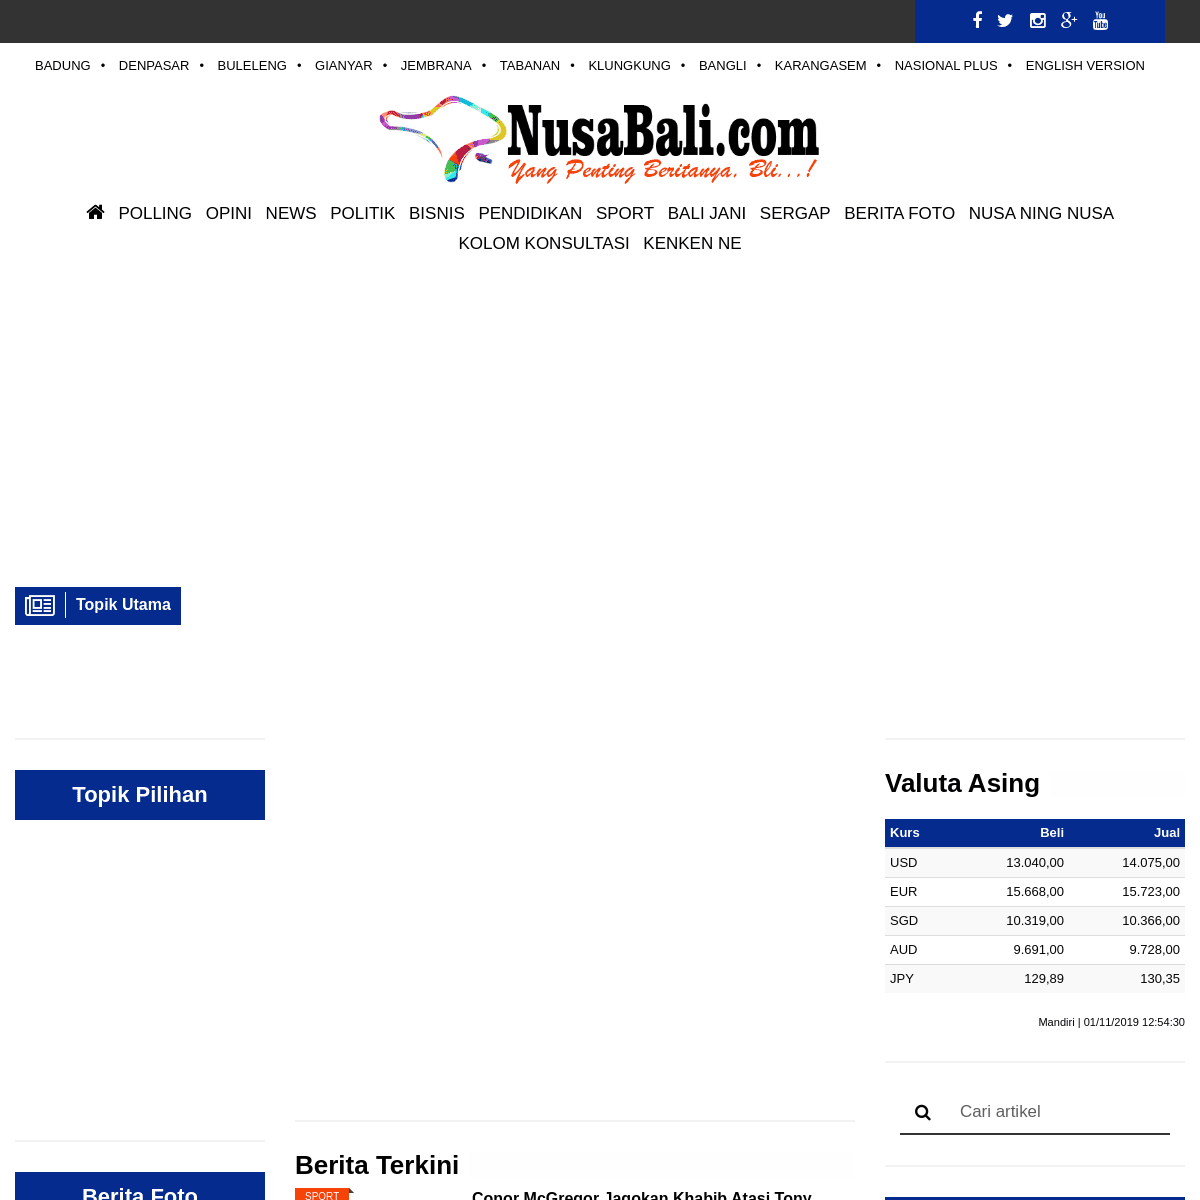 A complete backup of nusabali.com